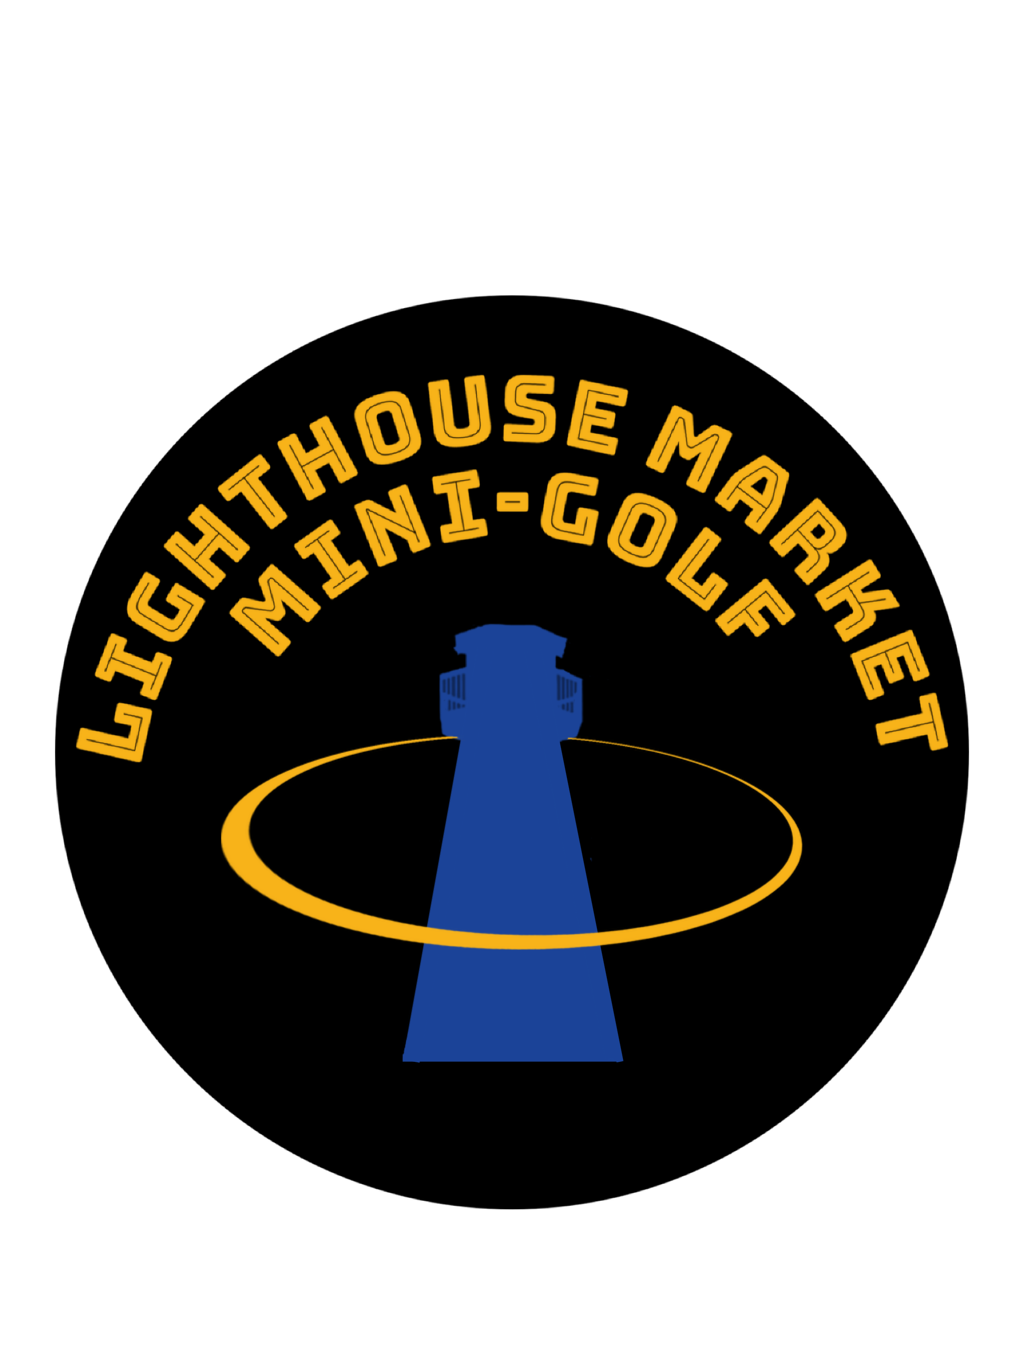 Lighthouse Market MINI GOLF